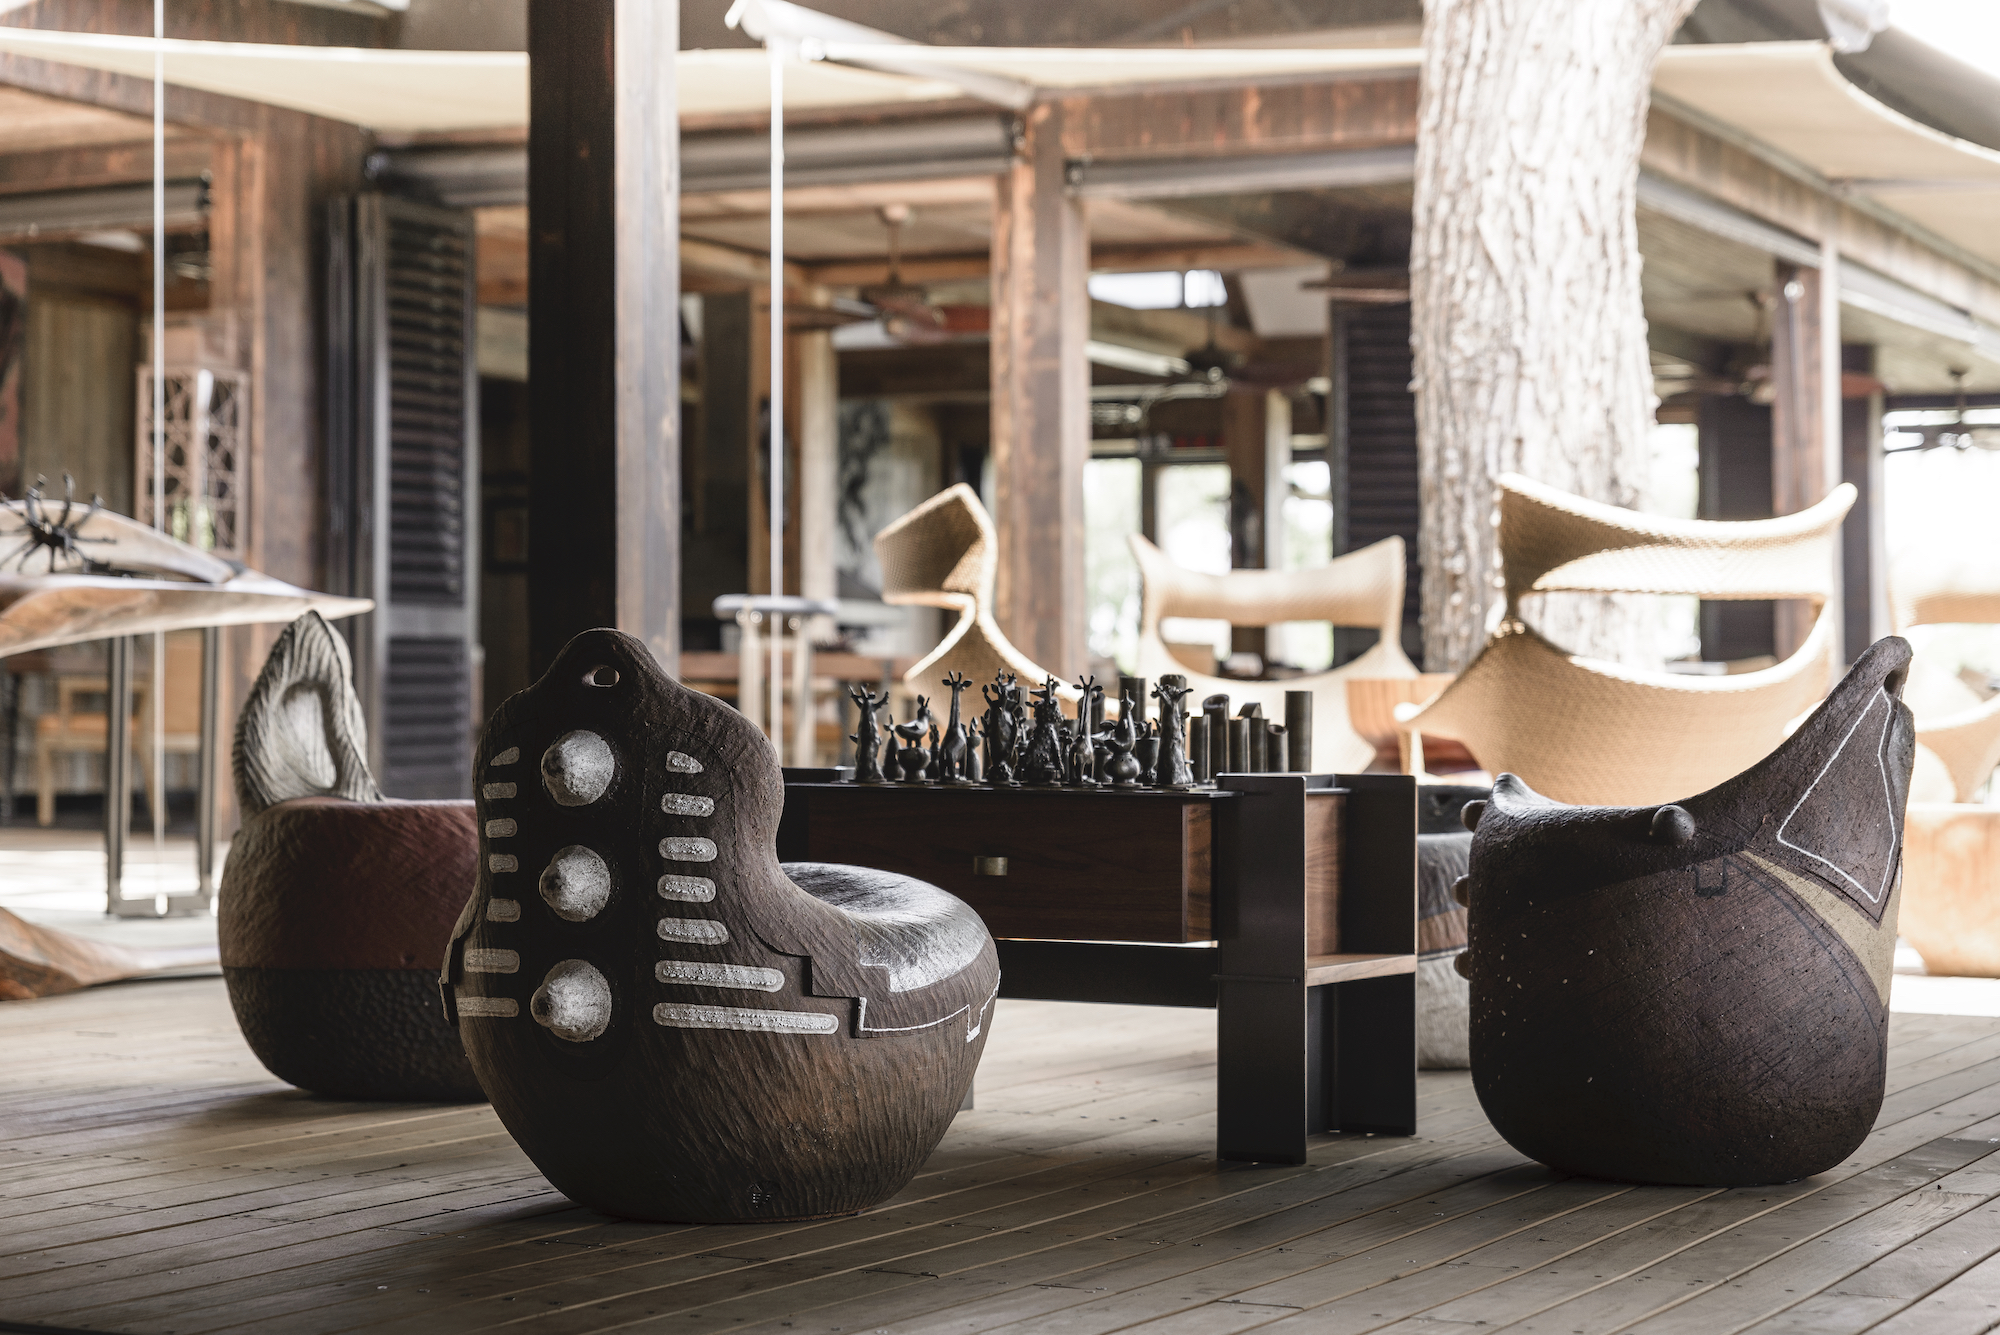 Sculptural pieces and intricate detailing at Xigera Safari Lodge